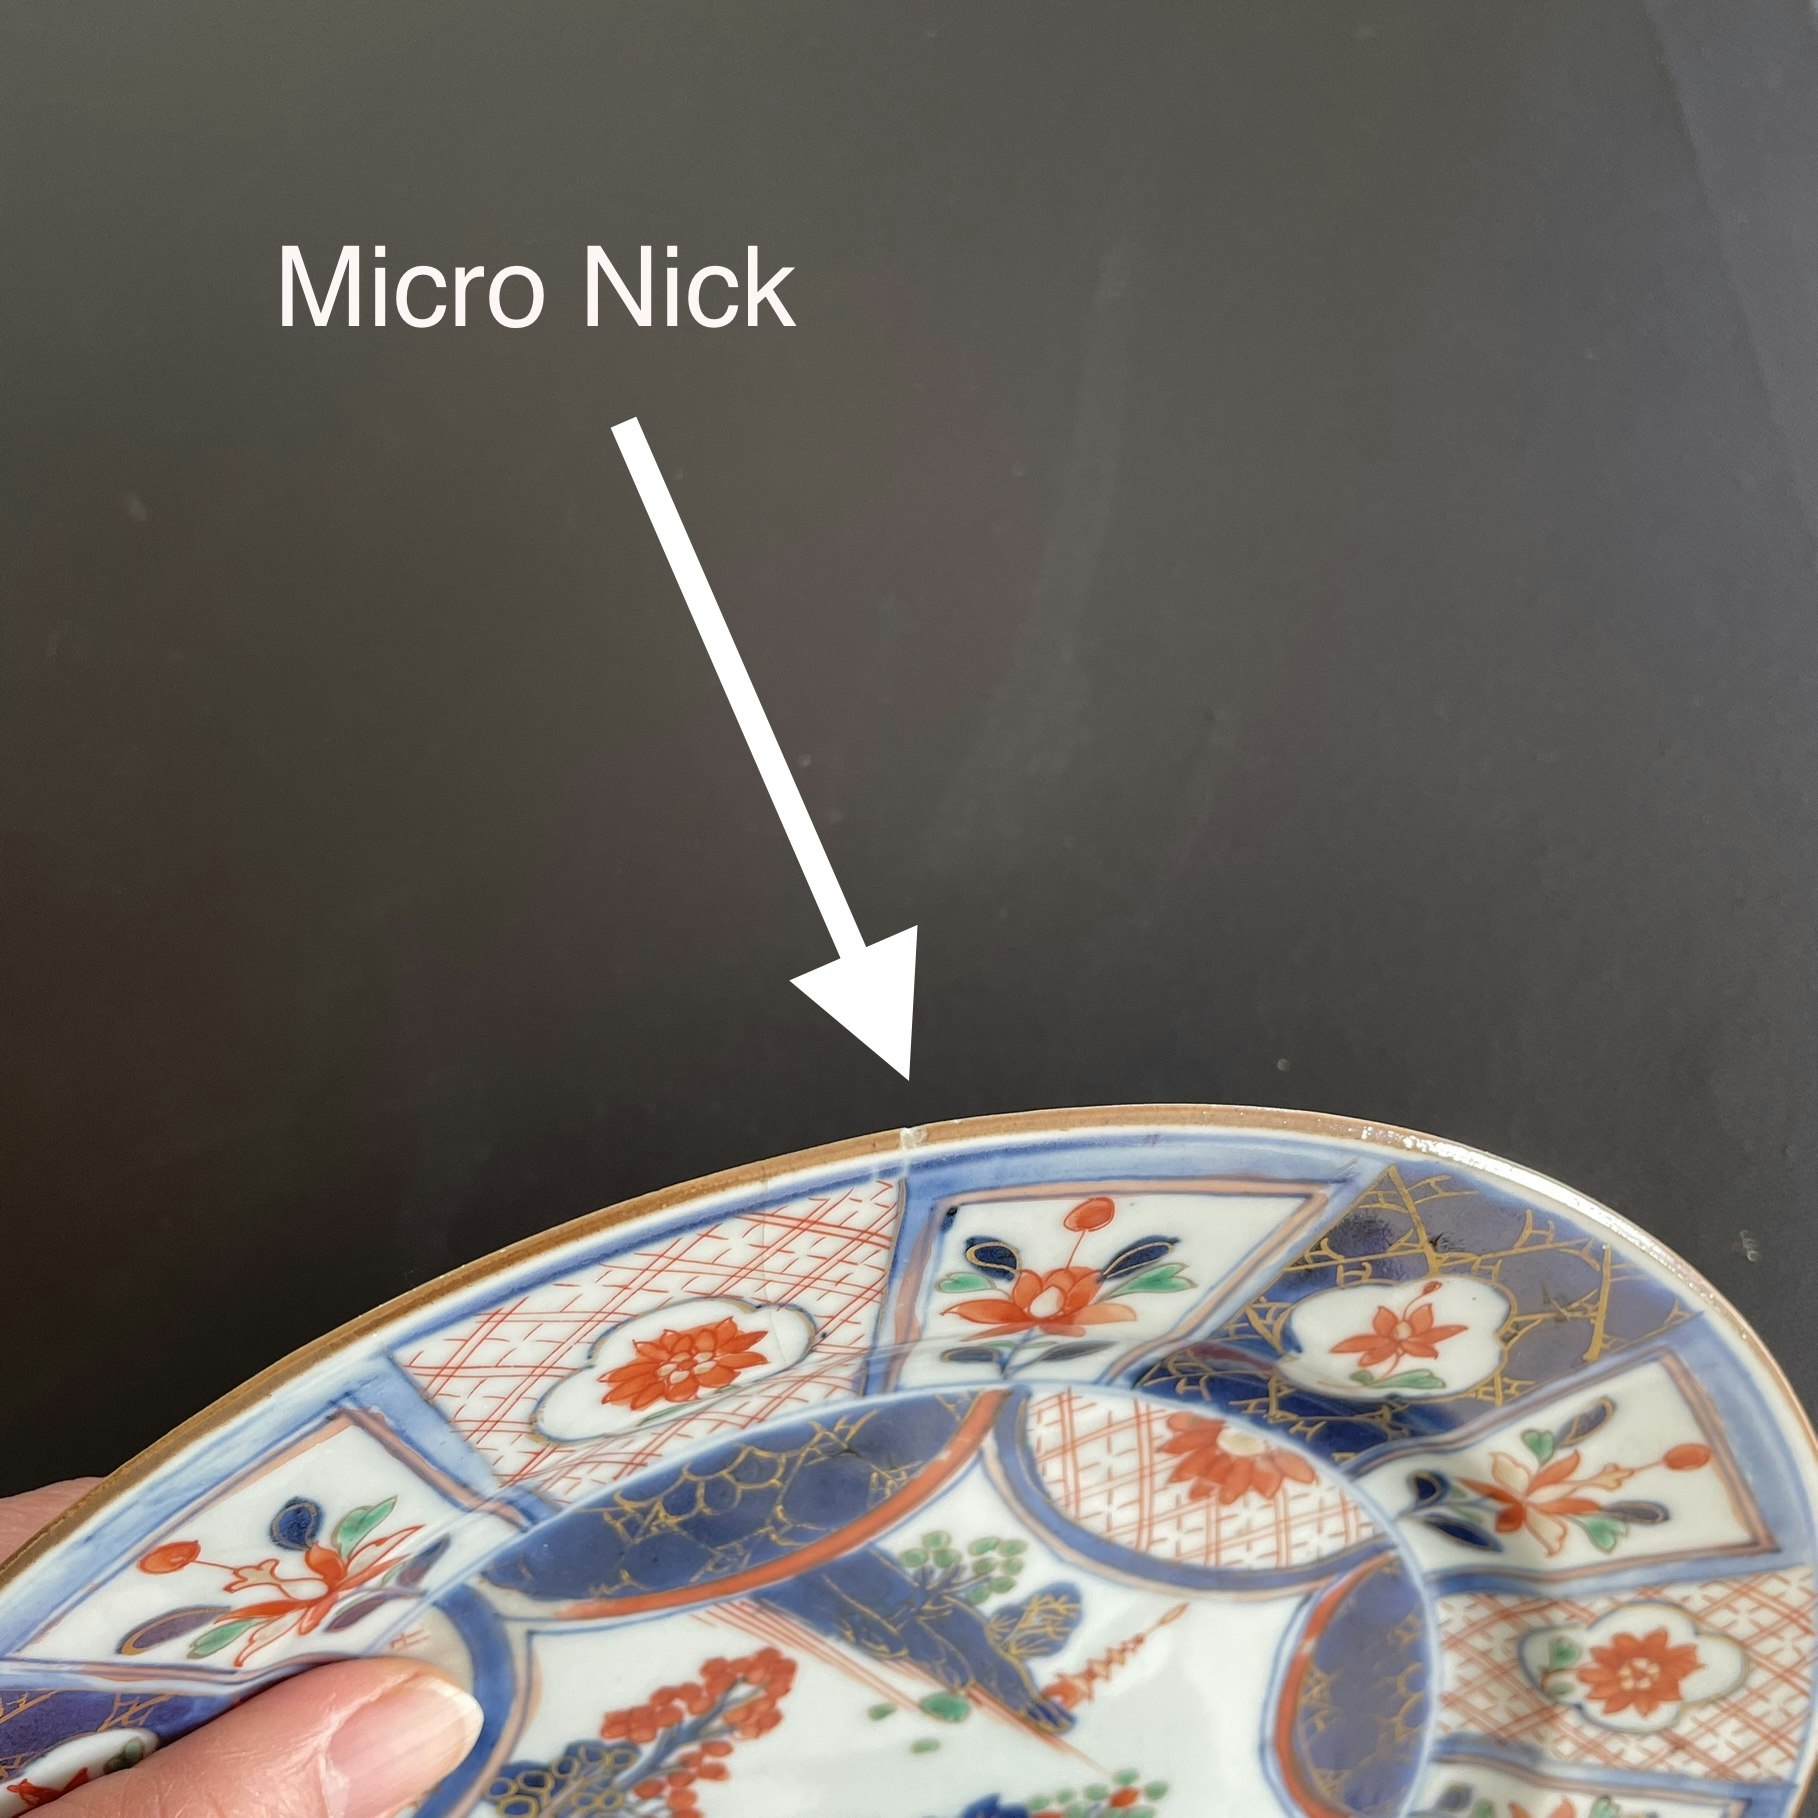 Antique Chinese export imari porcelain plate , Qianlong, 18thC #1413